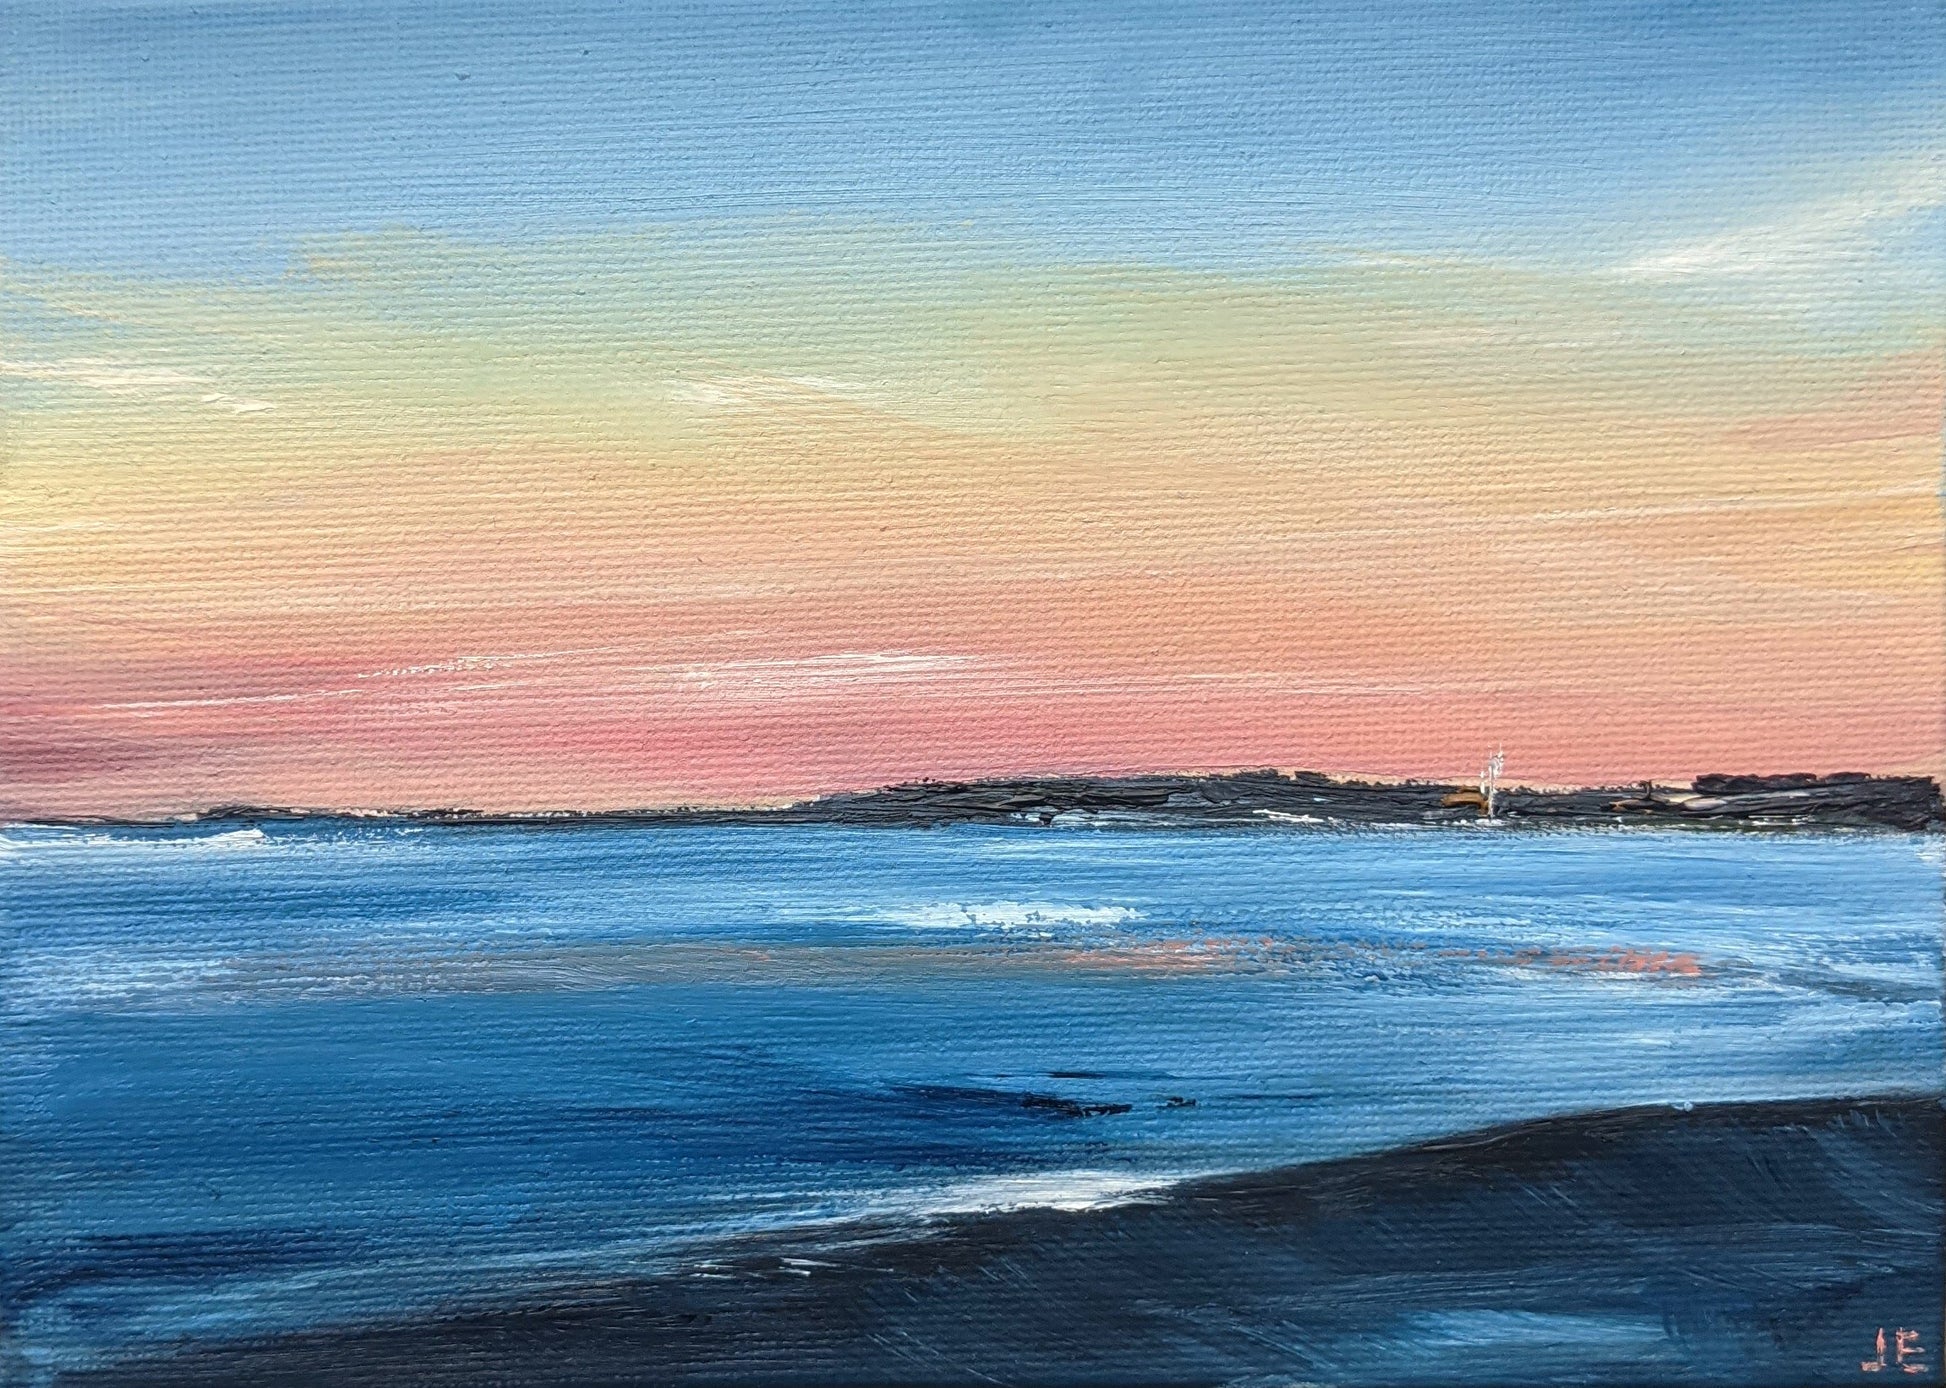 Miniature Weymouth Seascape oil painting on canvas board by Jo Earl